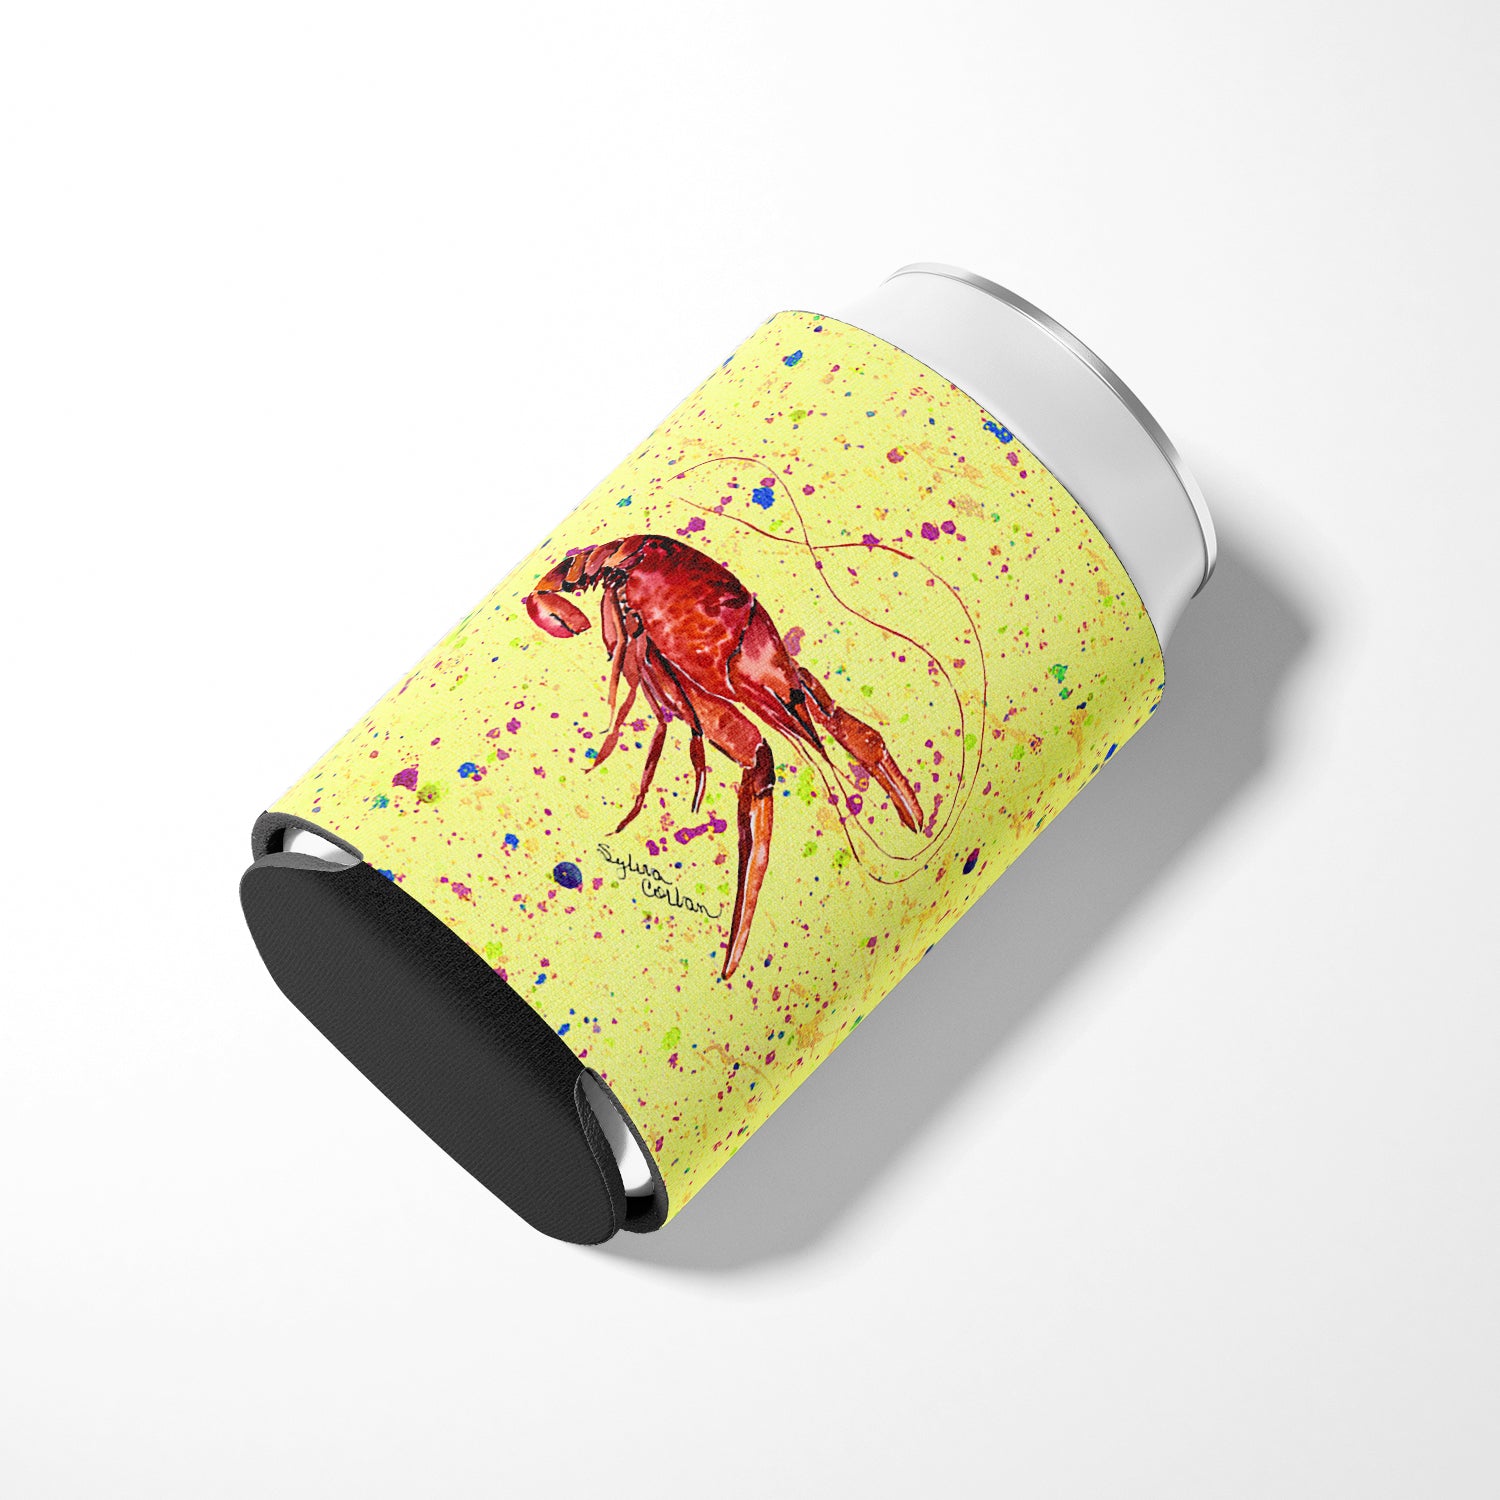 Crawfish on yellow Can or Bottle Beverage Insulator Hugger